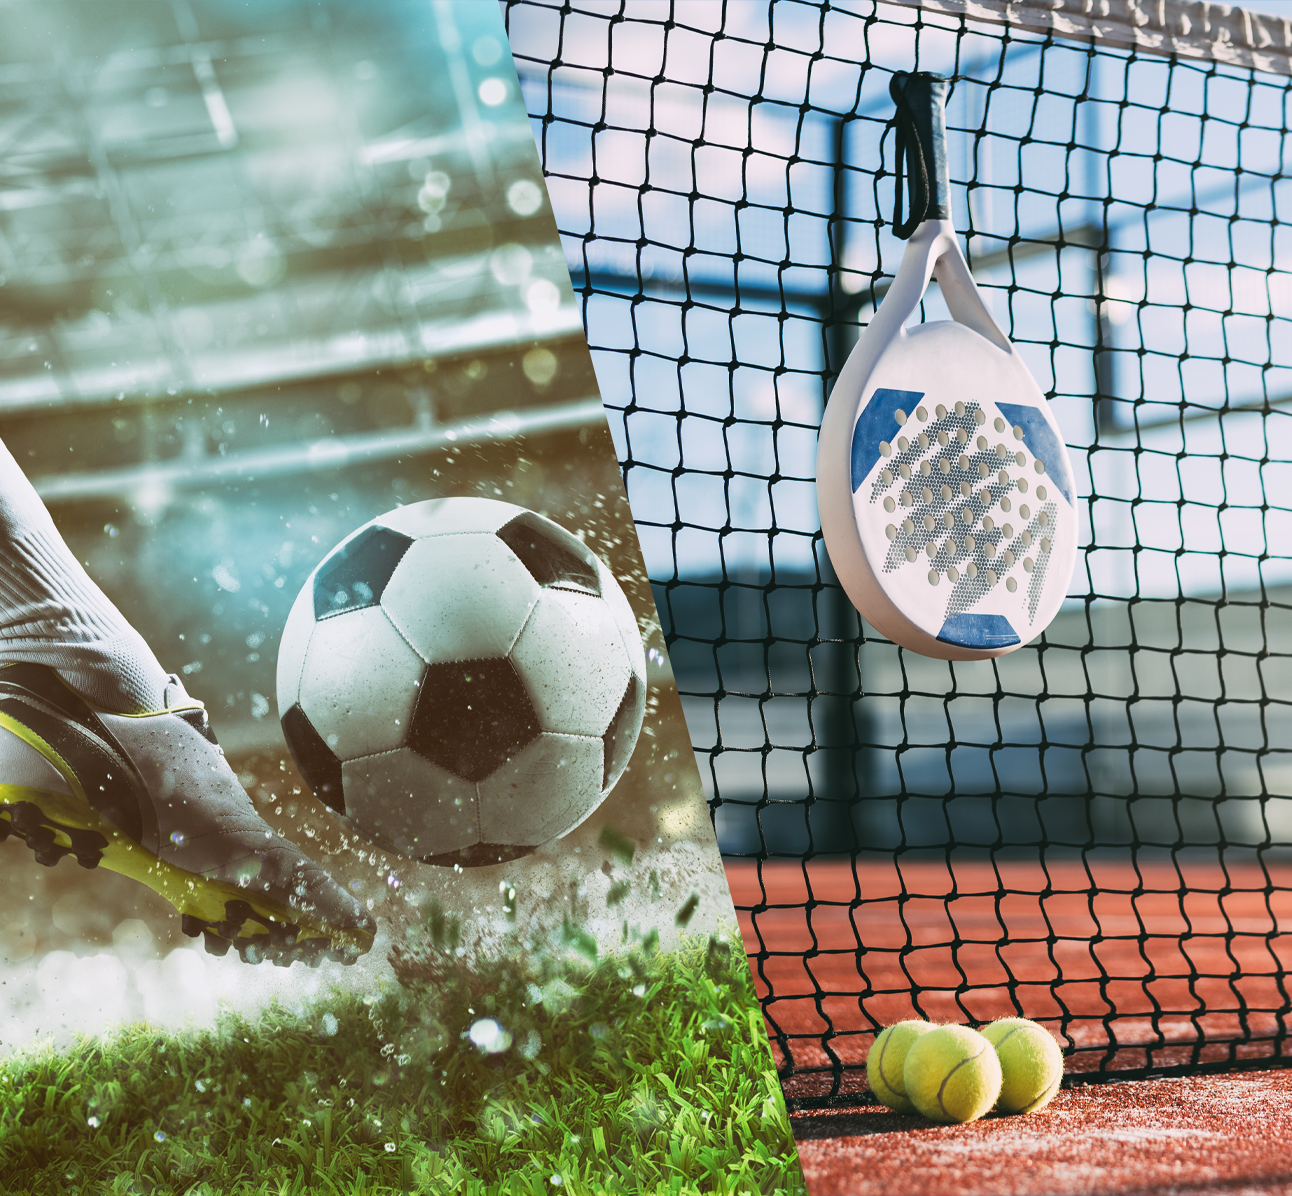 Projets sportifs : Football et tennis